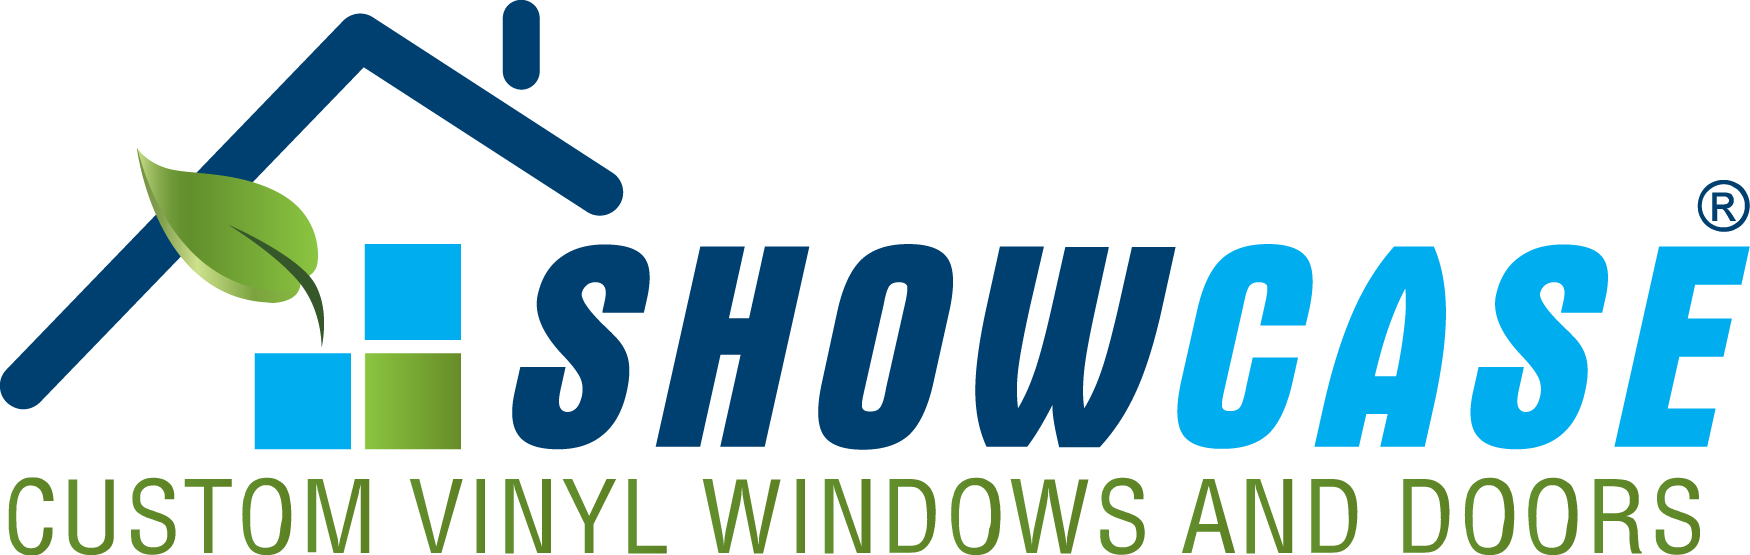 showcase-logo.png